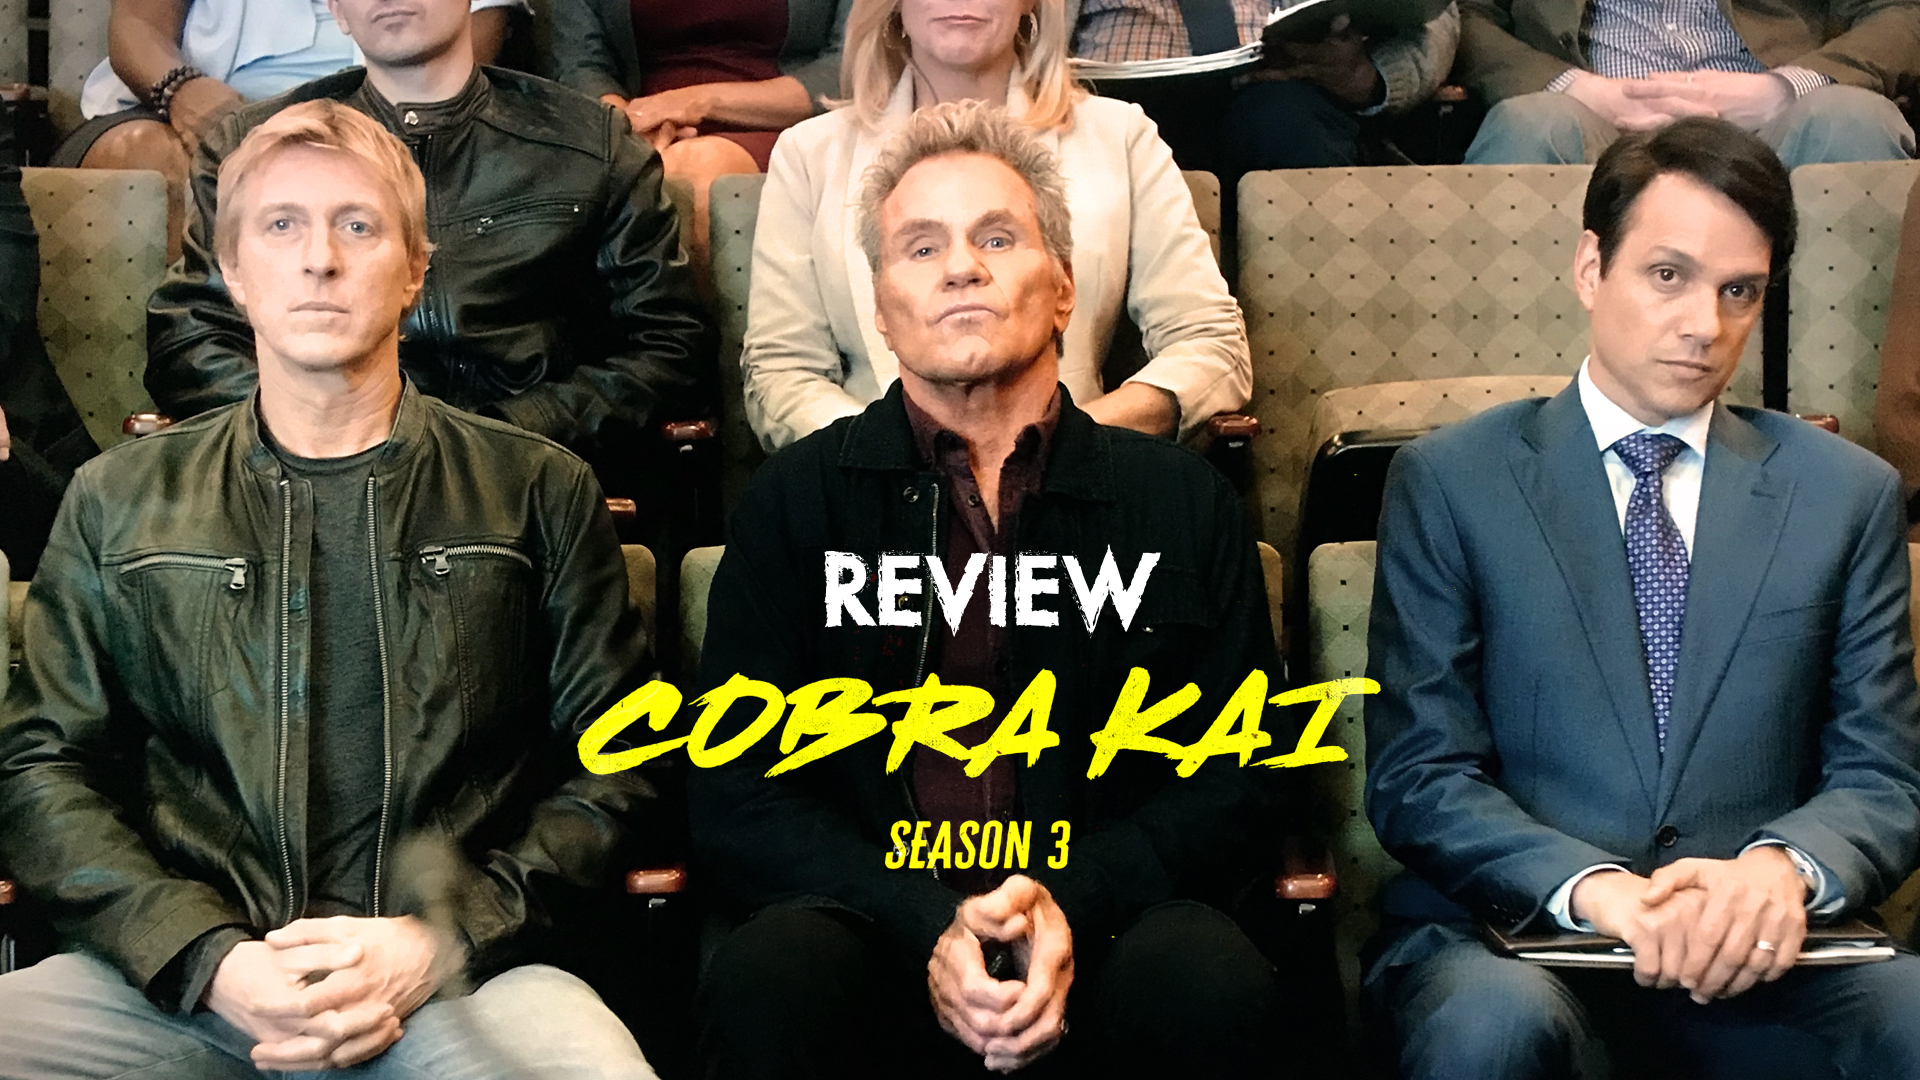 Cobra Kai Season 4 Release Date, Cast, Spoilers, and More